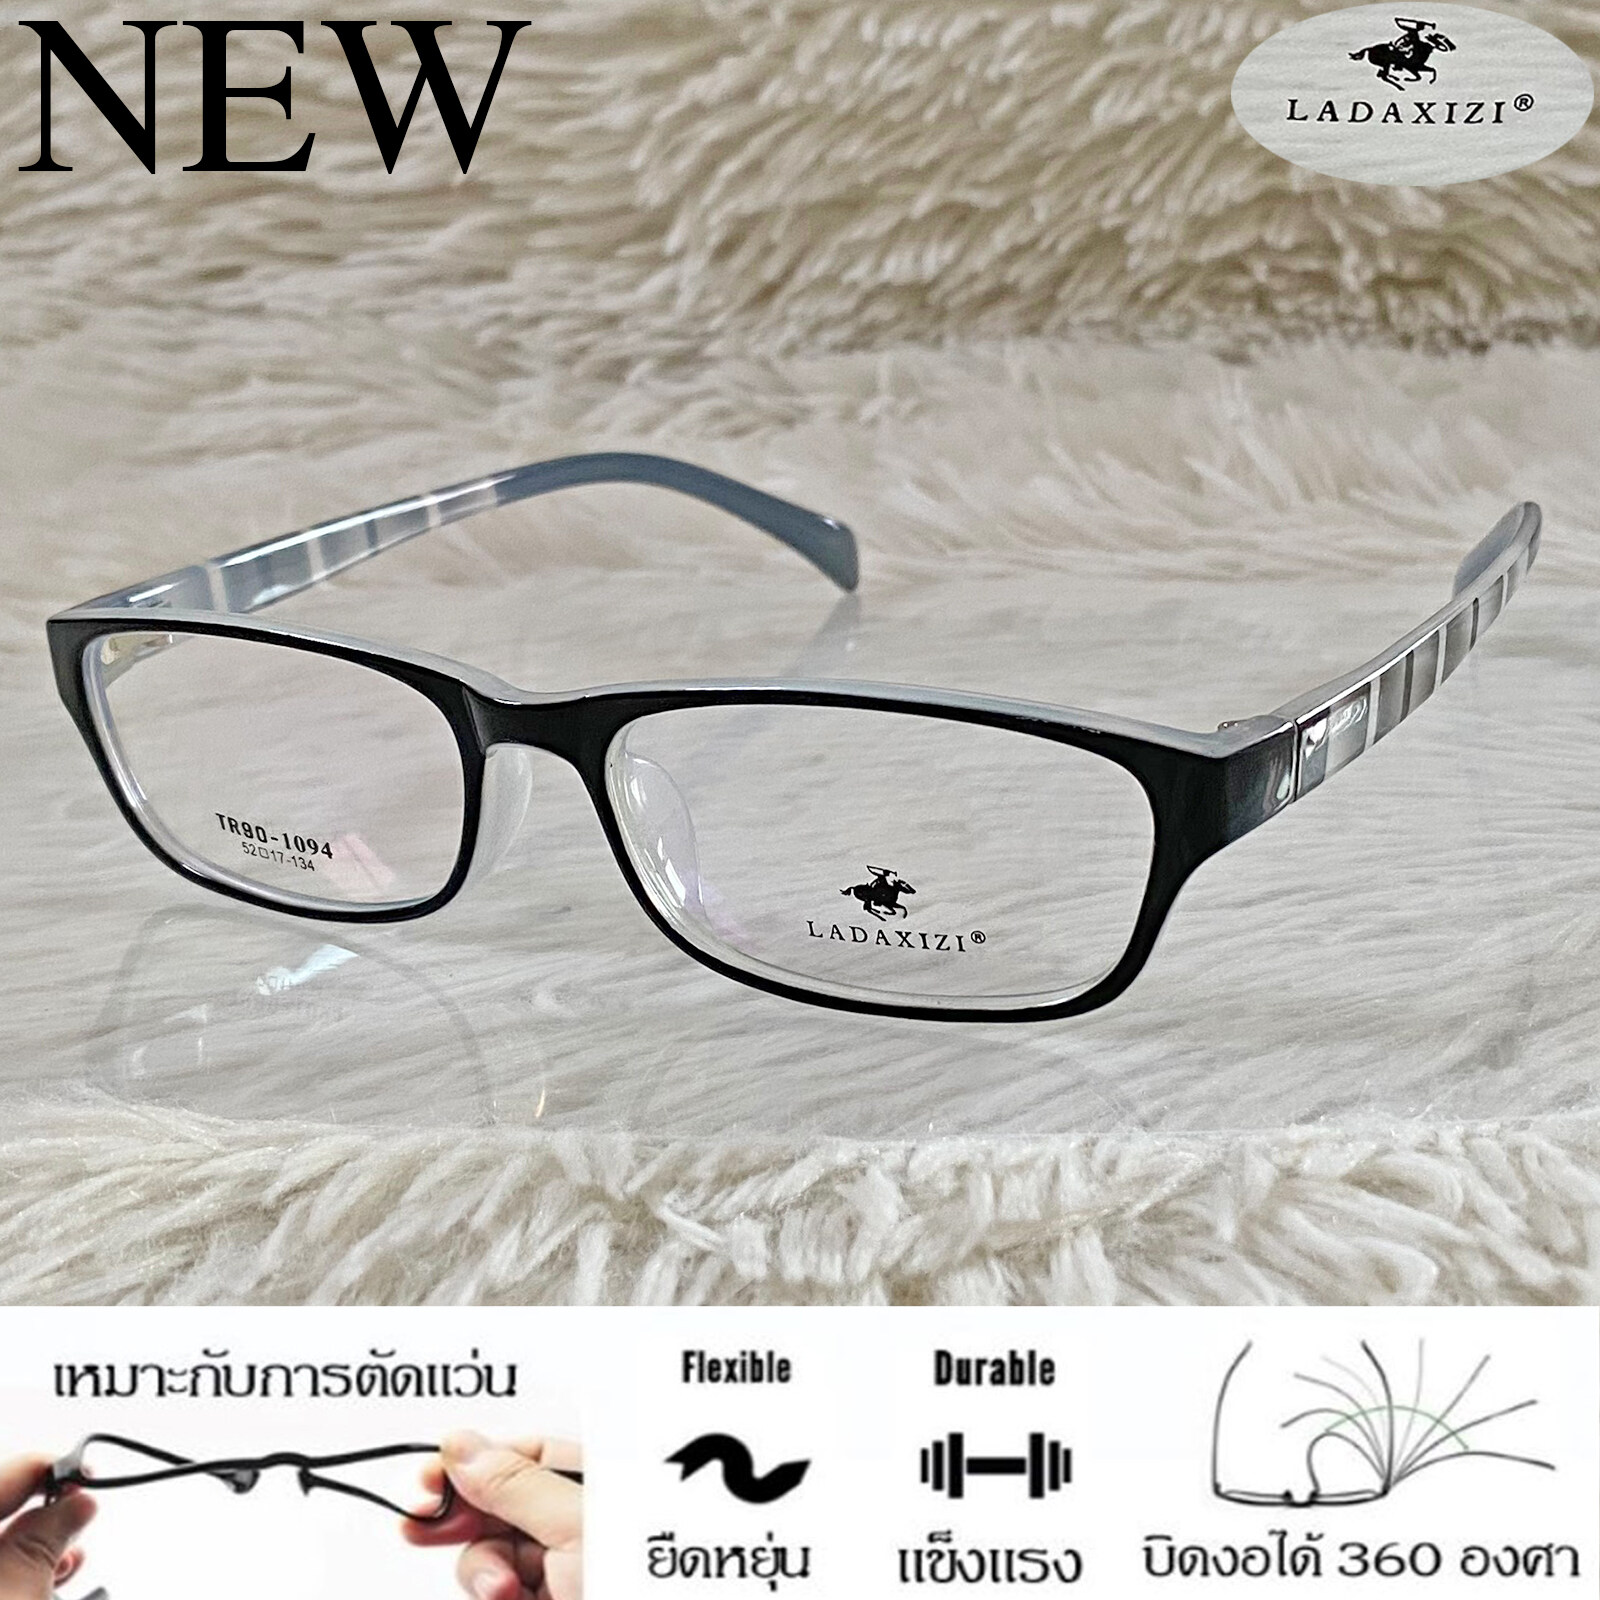 TR 90 กรอบแว่นตา สำหรับตัดเลนส์ แว่นตา Fashion ชาย-หญิง รุ่น LADAXIZI 10944 สีดำ กรอบเต็ม ทรงรี ขาข้อต่อ ทนความร้อนสูง รับตัดเลนส์ ทุกชนิด